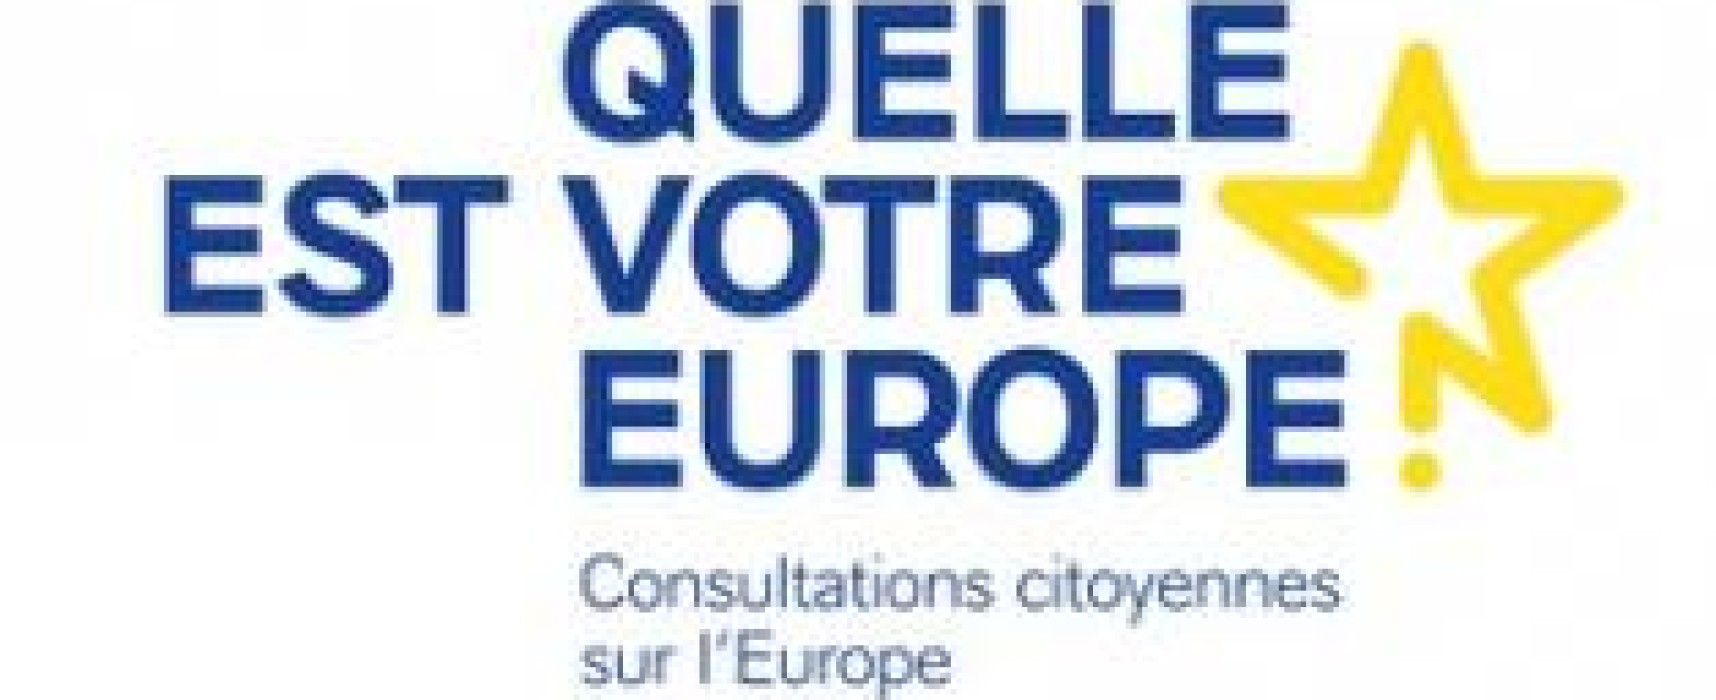 Consultations citoyennes sur l’Europe